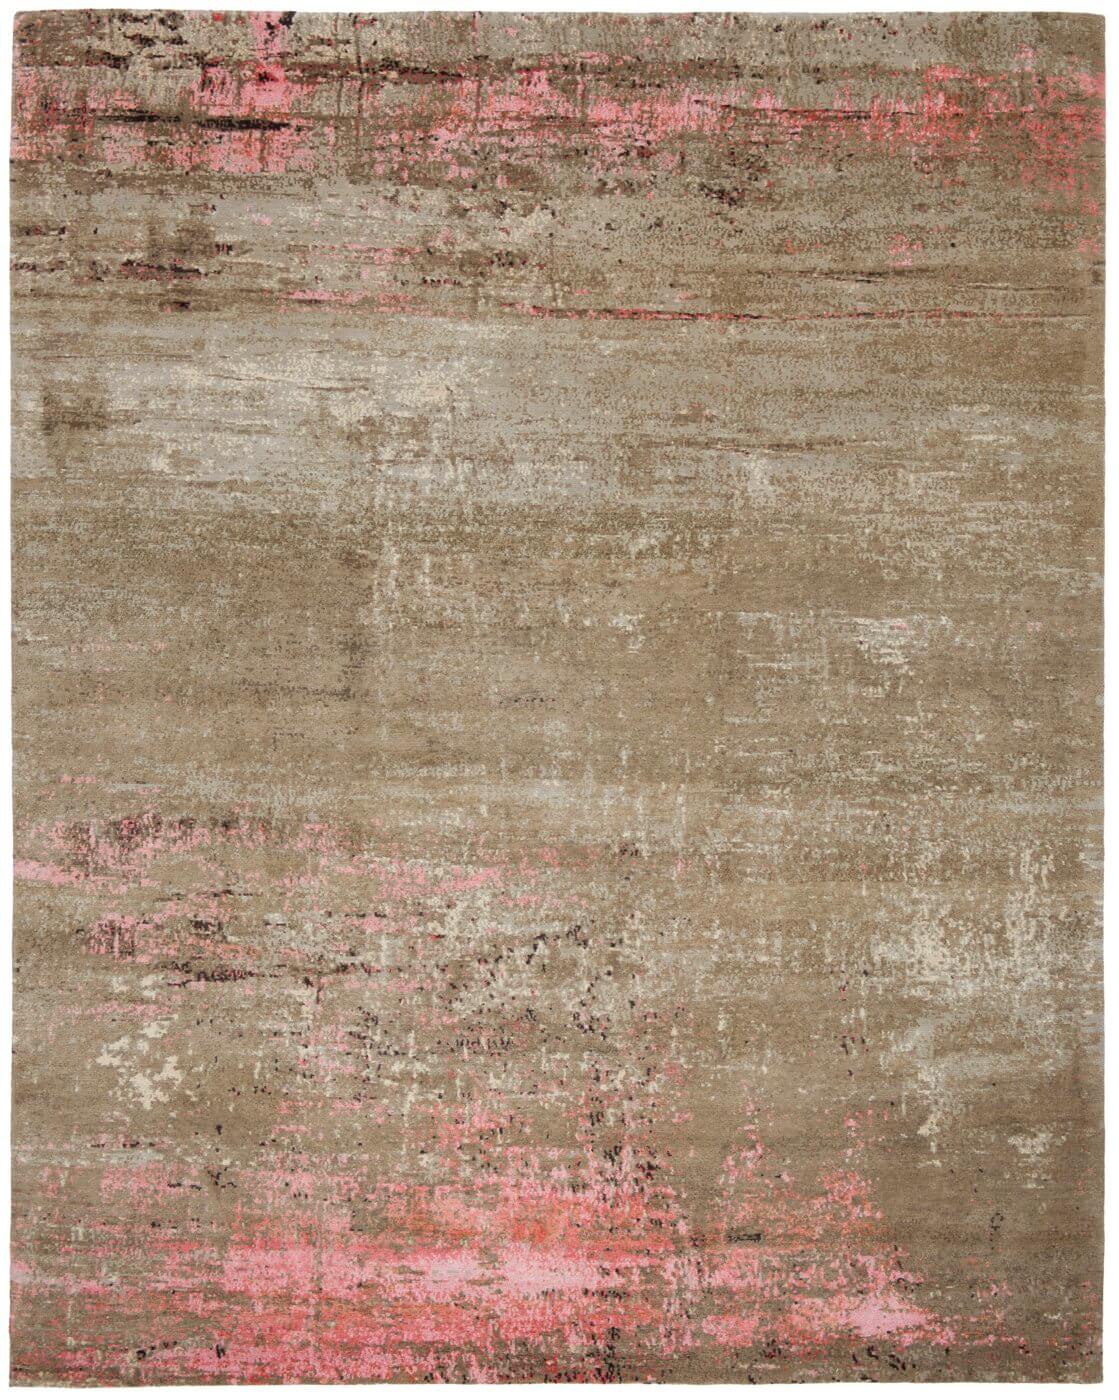 Элитный ковер Artwork 19 розовый германского бренда Jan Kath